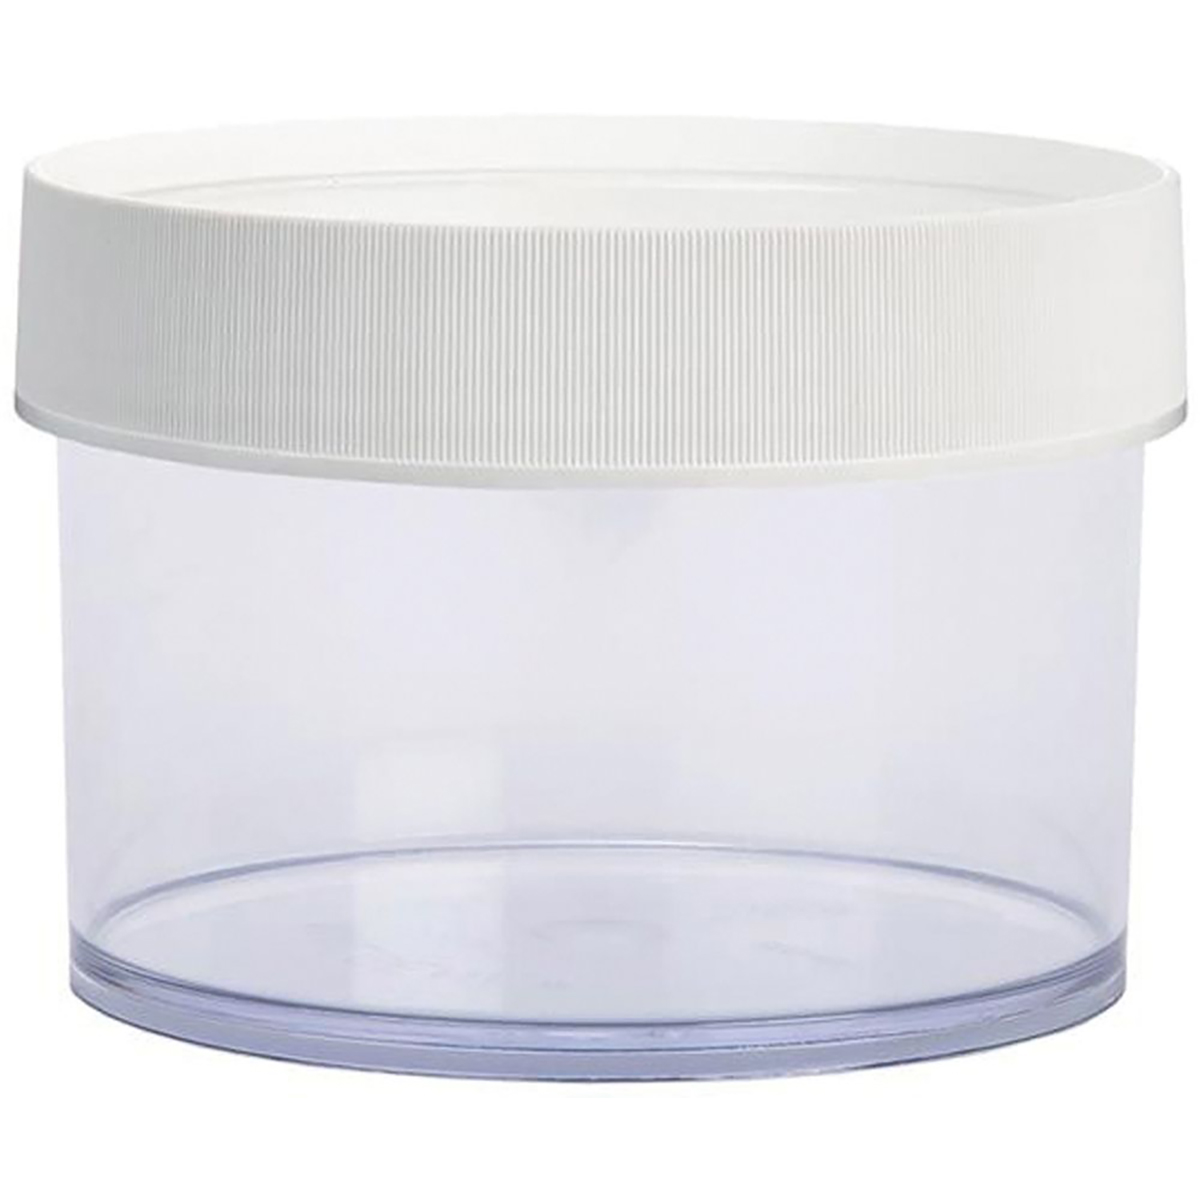 Nalgene Polypropylene Wide Mouth Storage Jar - 16 oz. - Clear - image 1 of 6